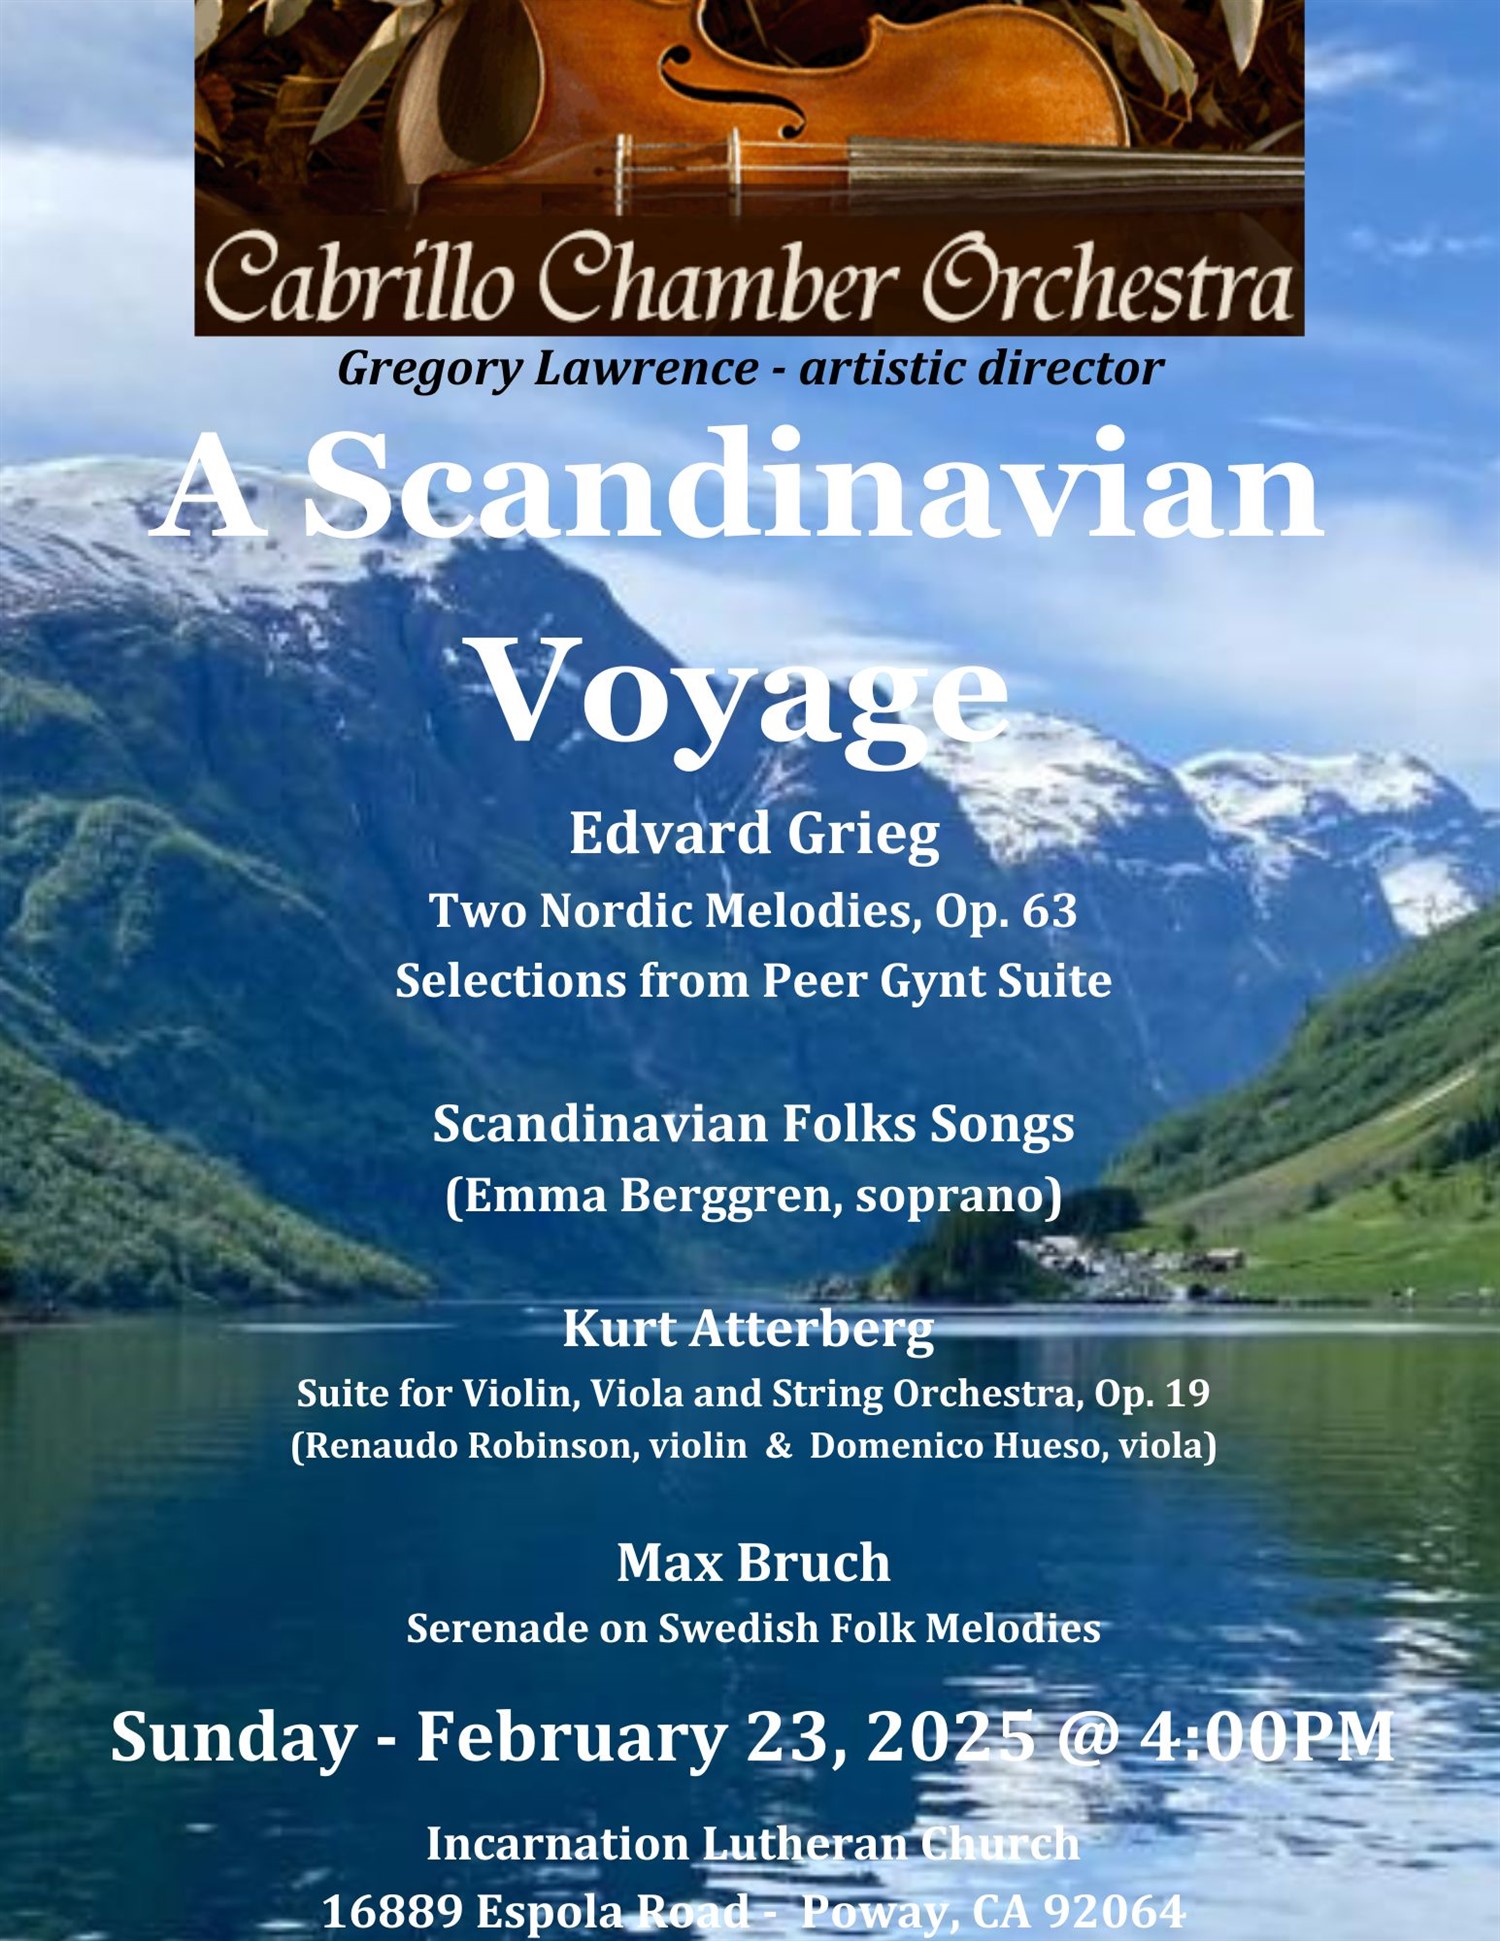 'A Scandinavian Voyage'  on févr. 23, 04:00@Incarnation Lutheran Church - Achetez des billets et obtenez des informations surCabrillo Chamber Orchestra 